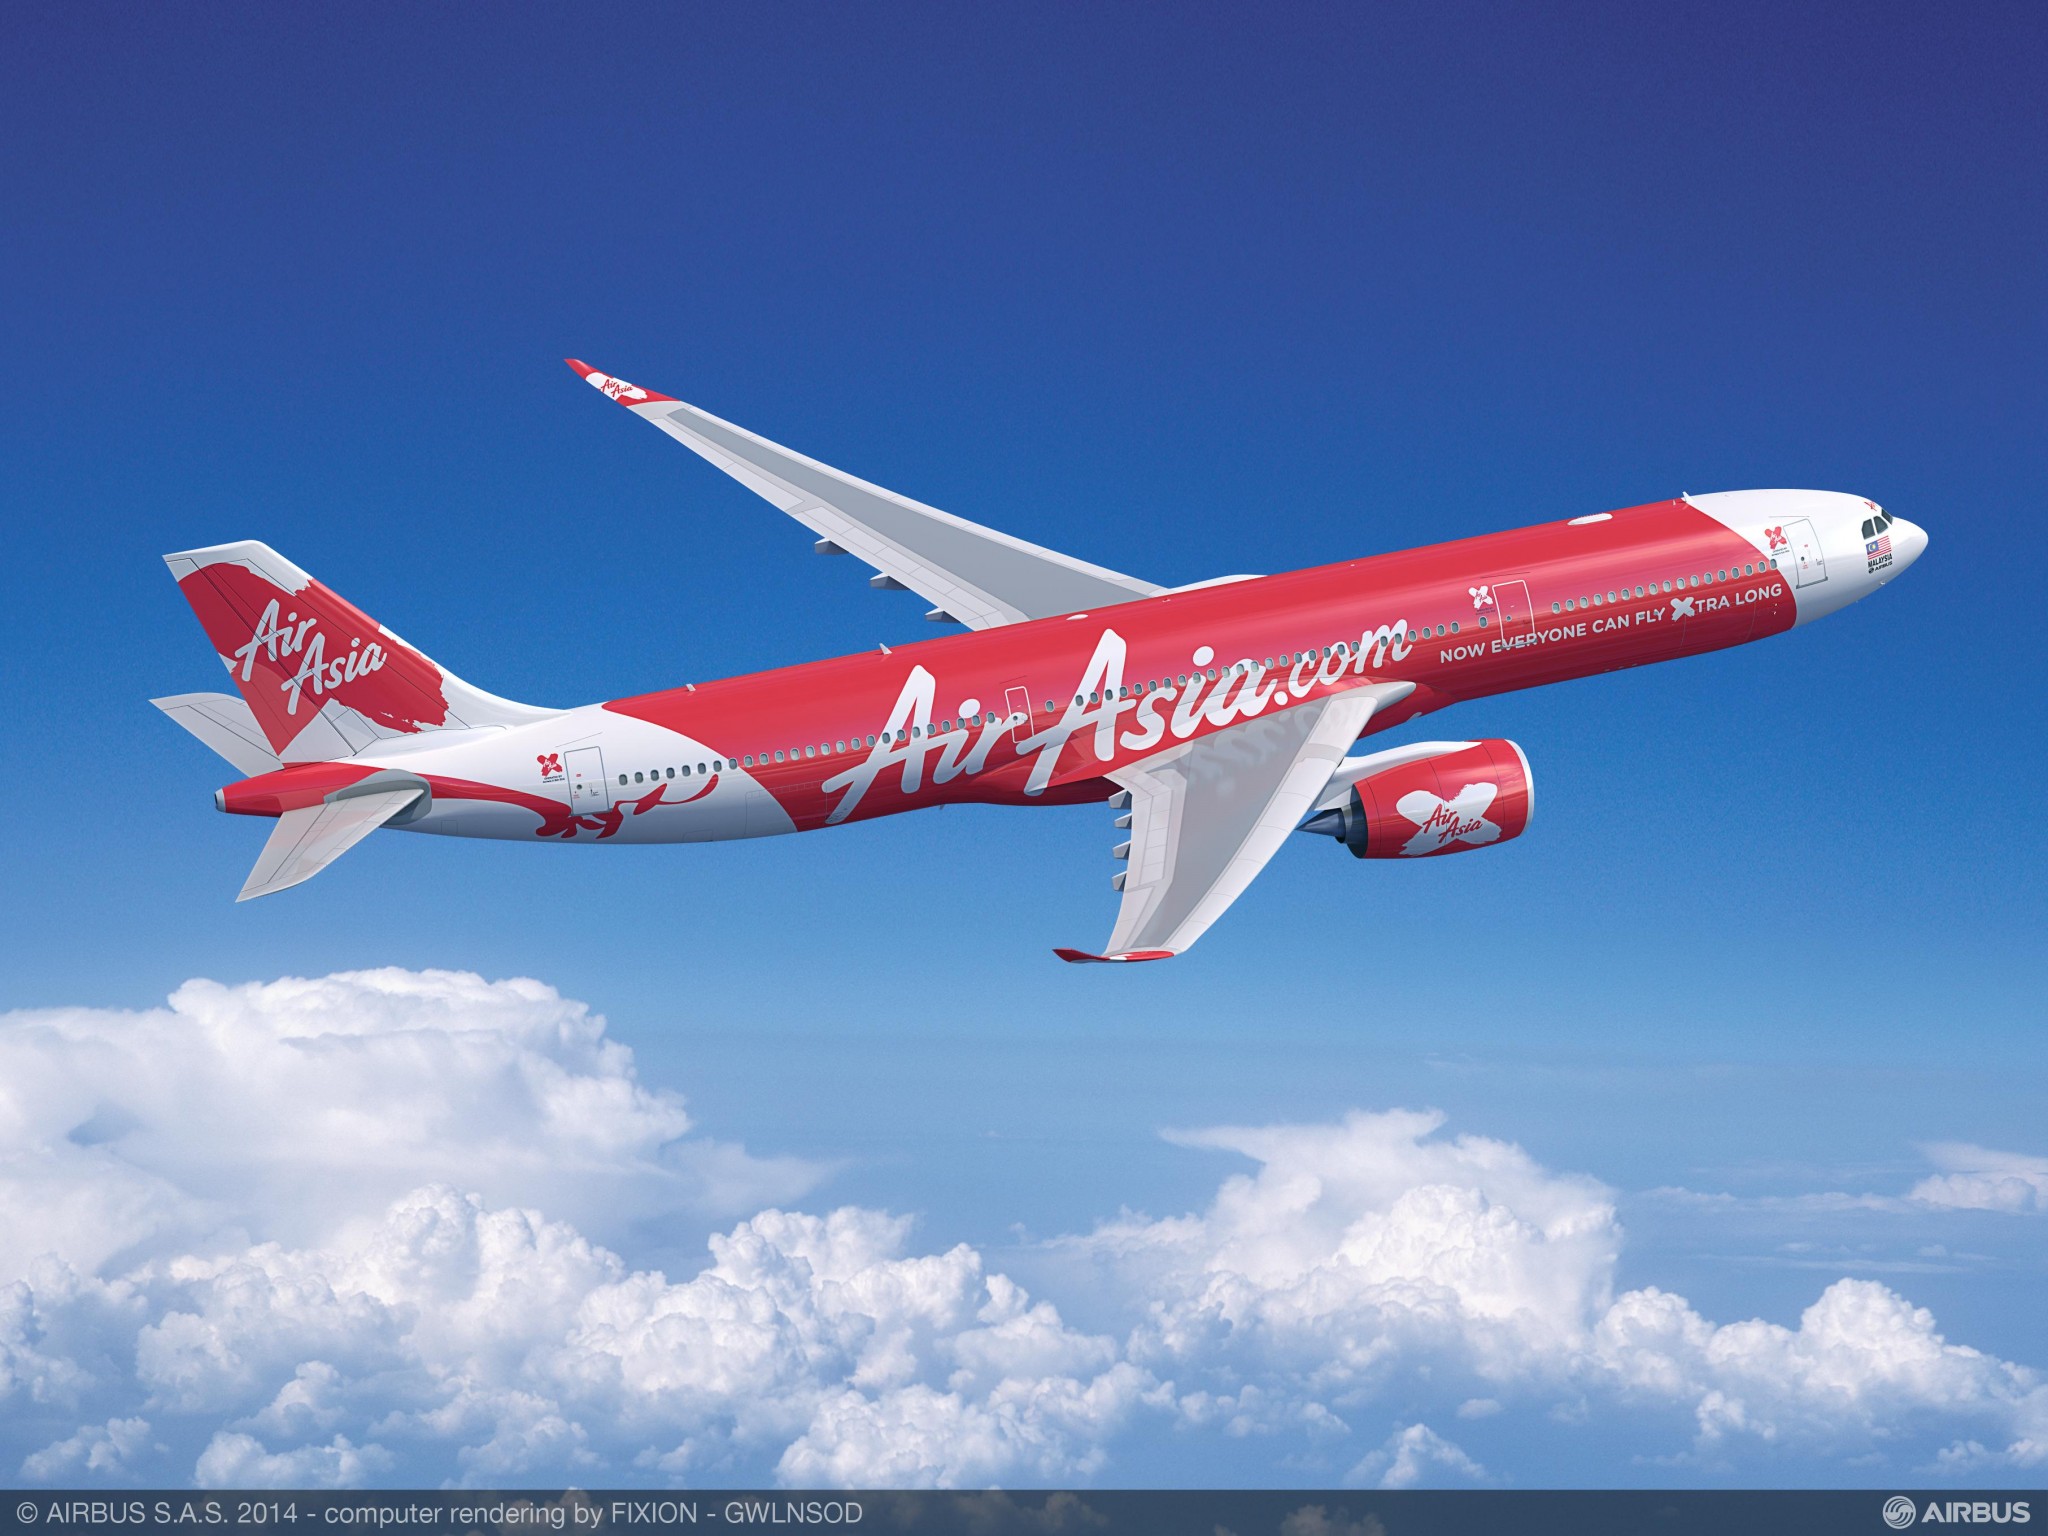 AirAsia X posts quarterly profit